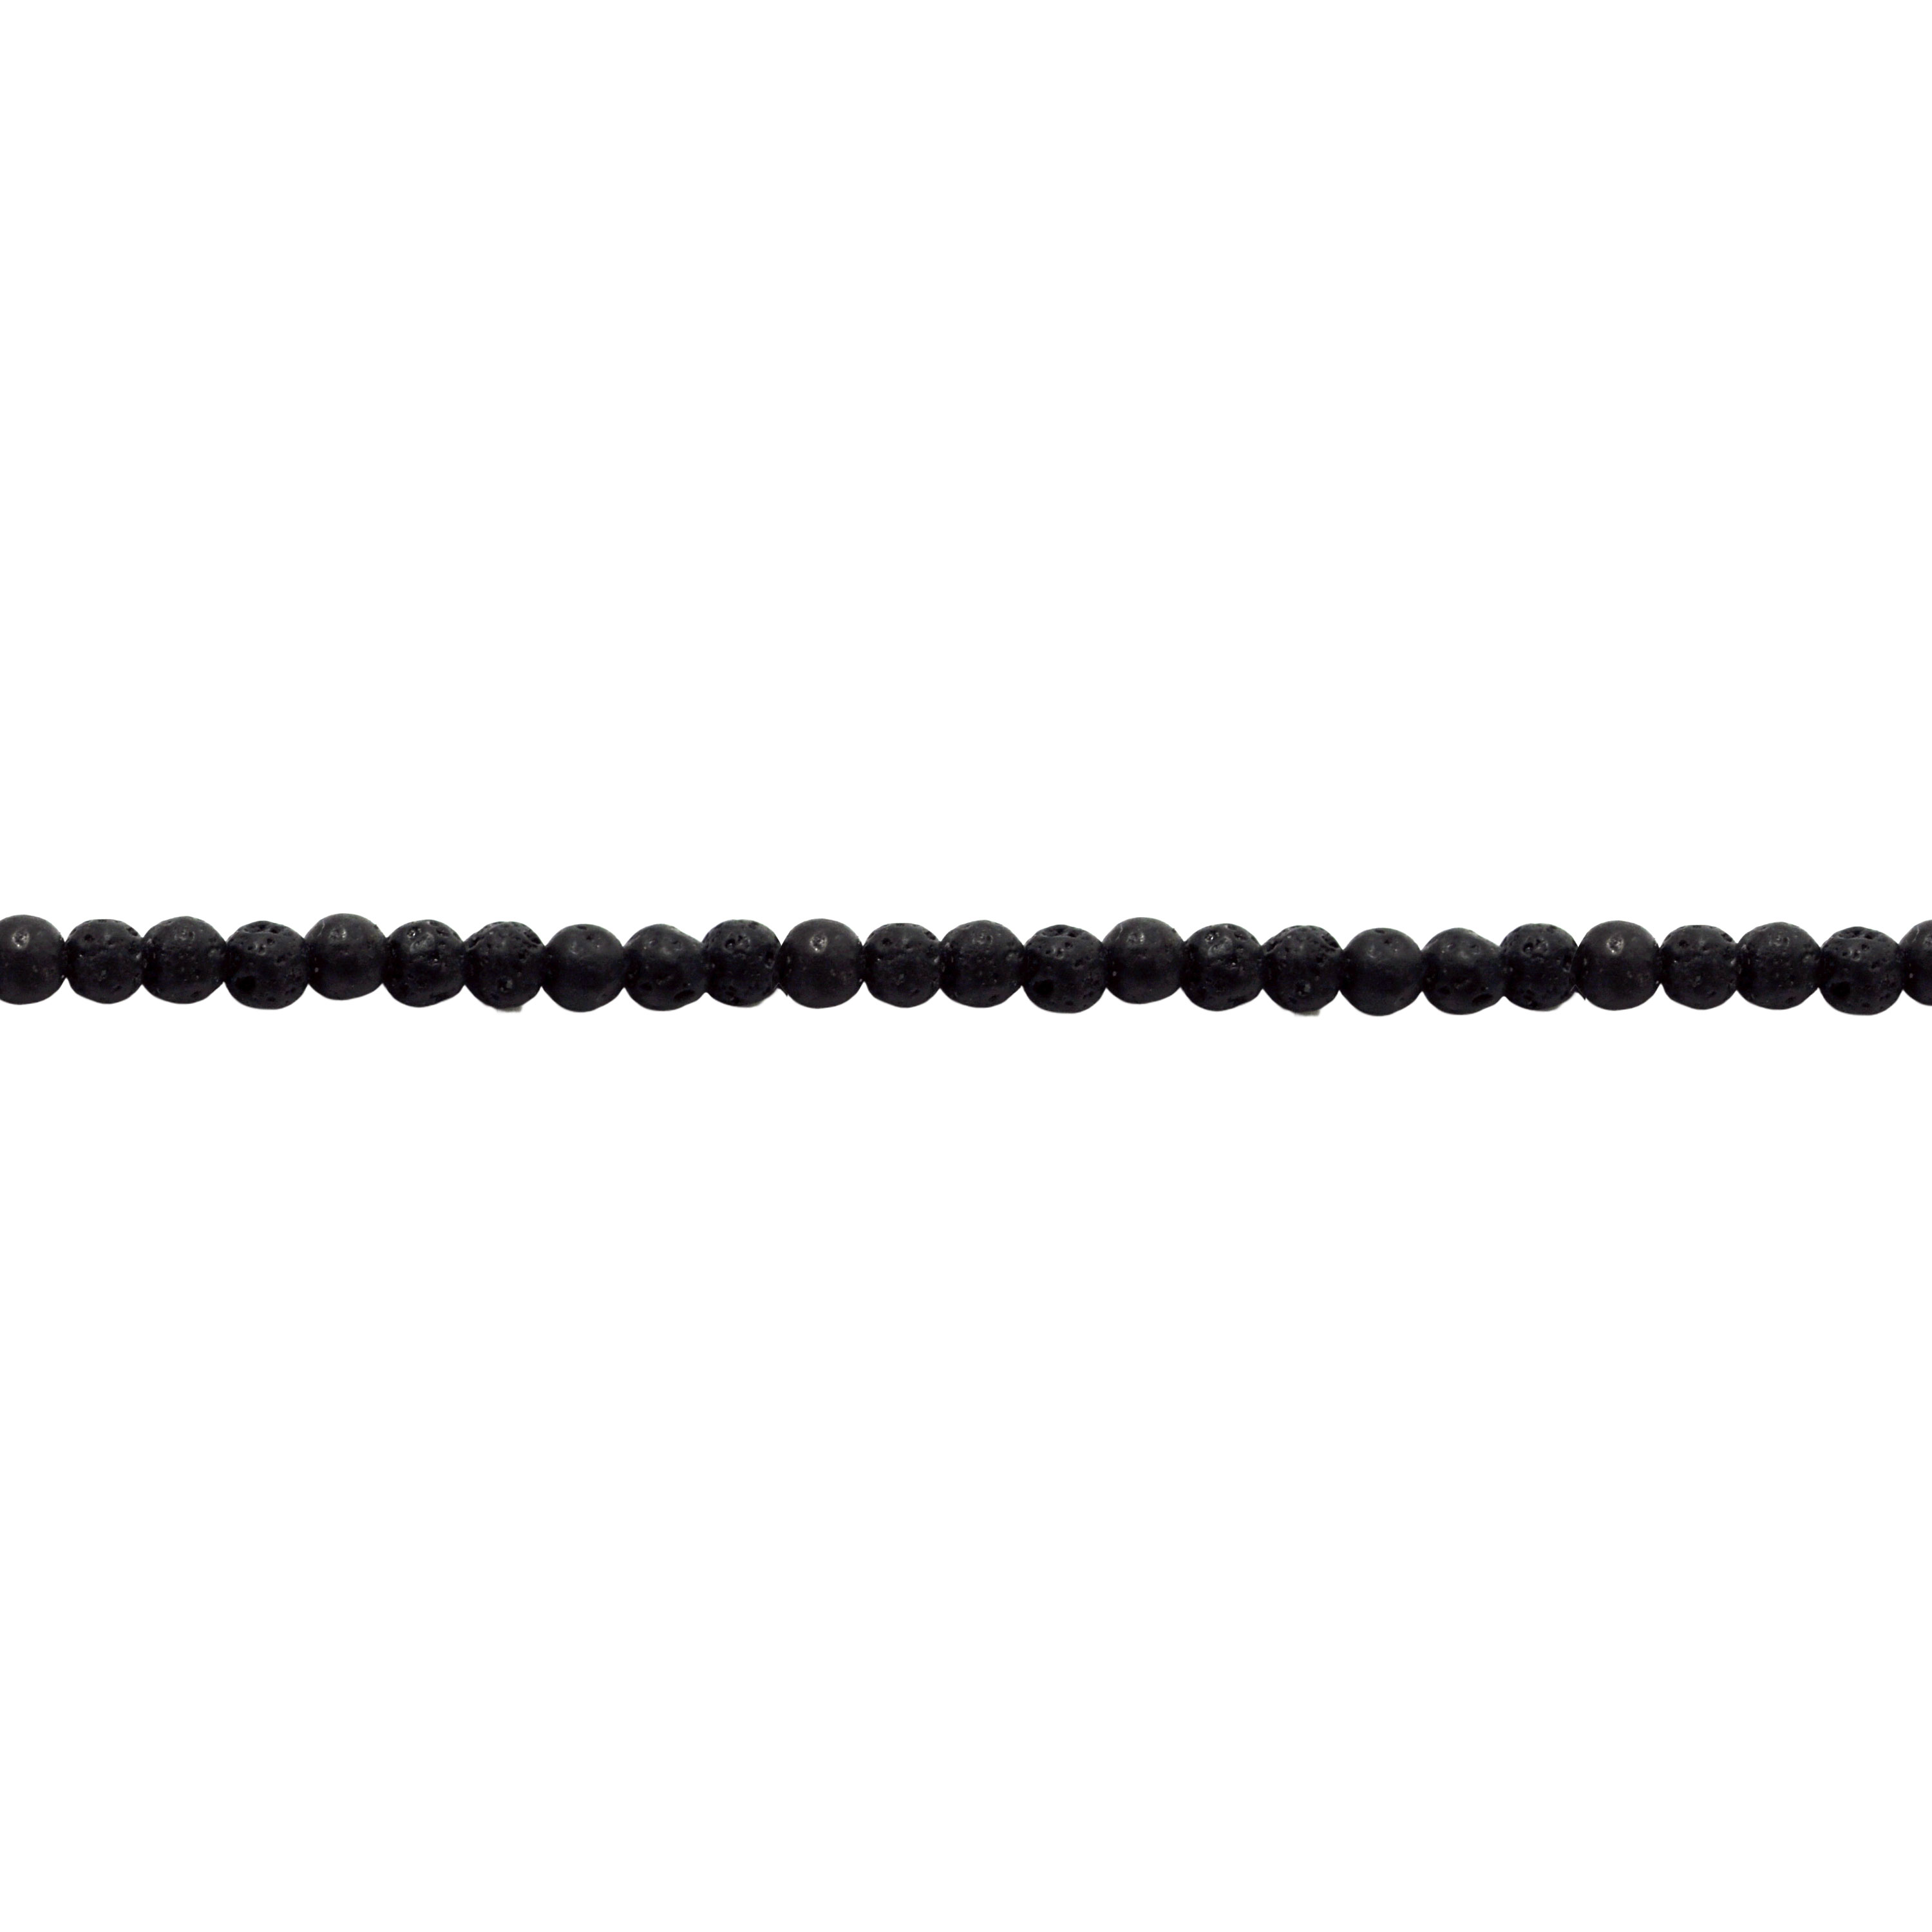 4mm Black Lava Beads